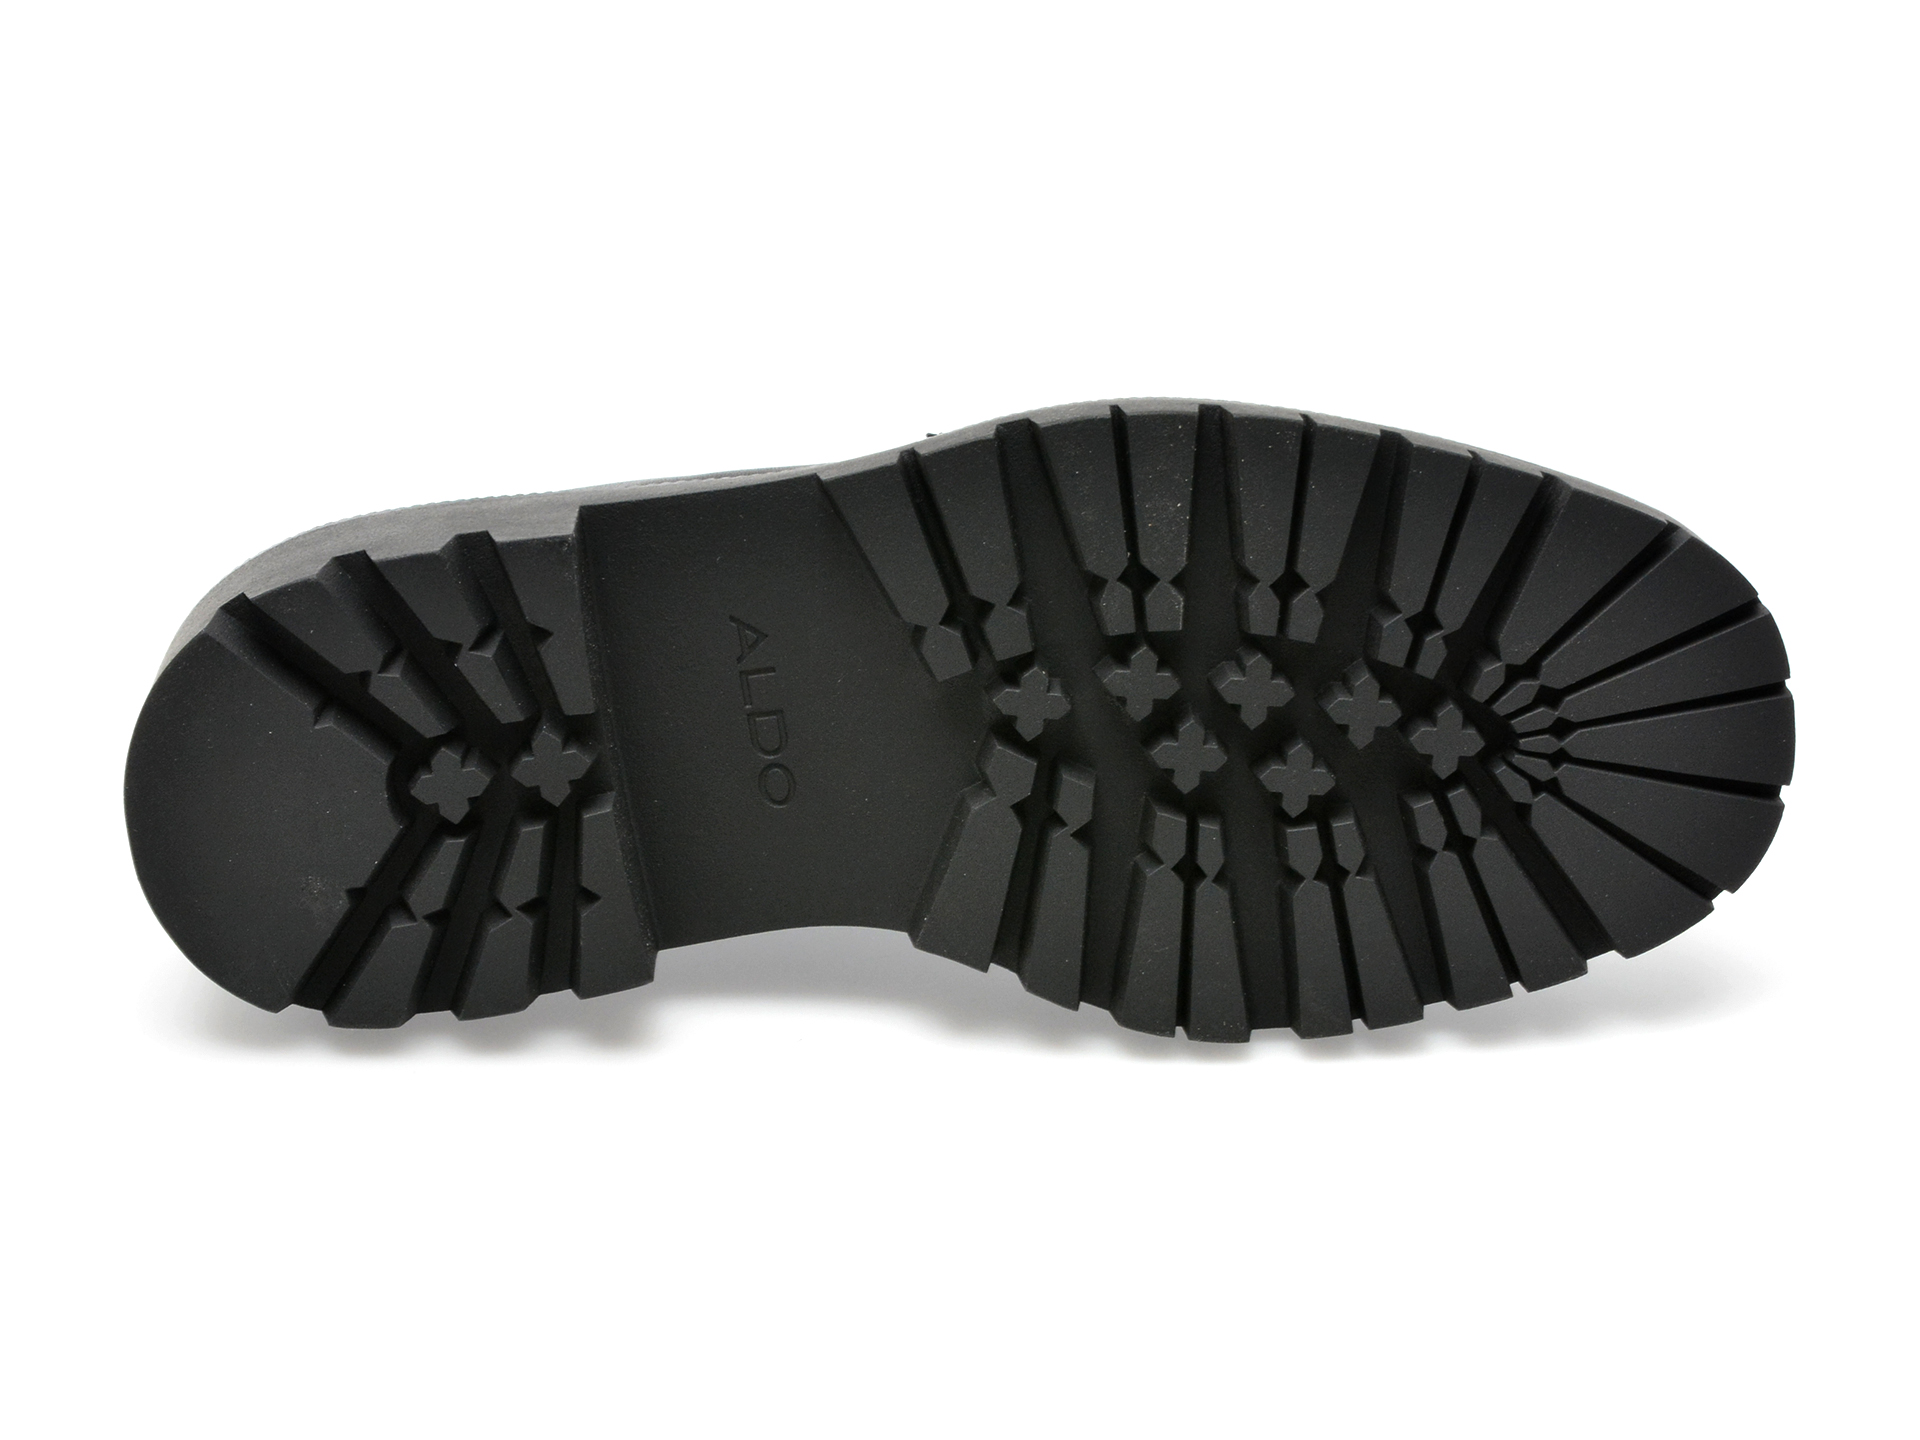 Pantofi ALDO negri, BIGSTRUT009, din piele naturala